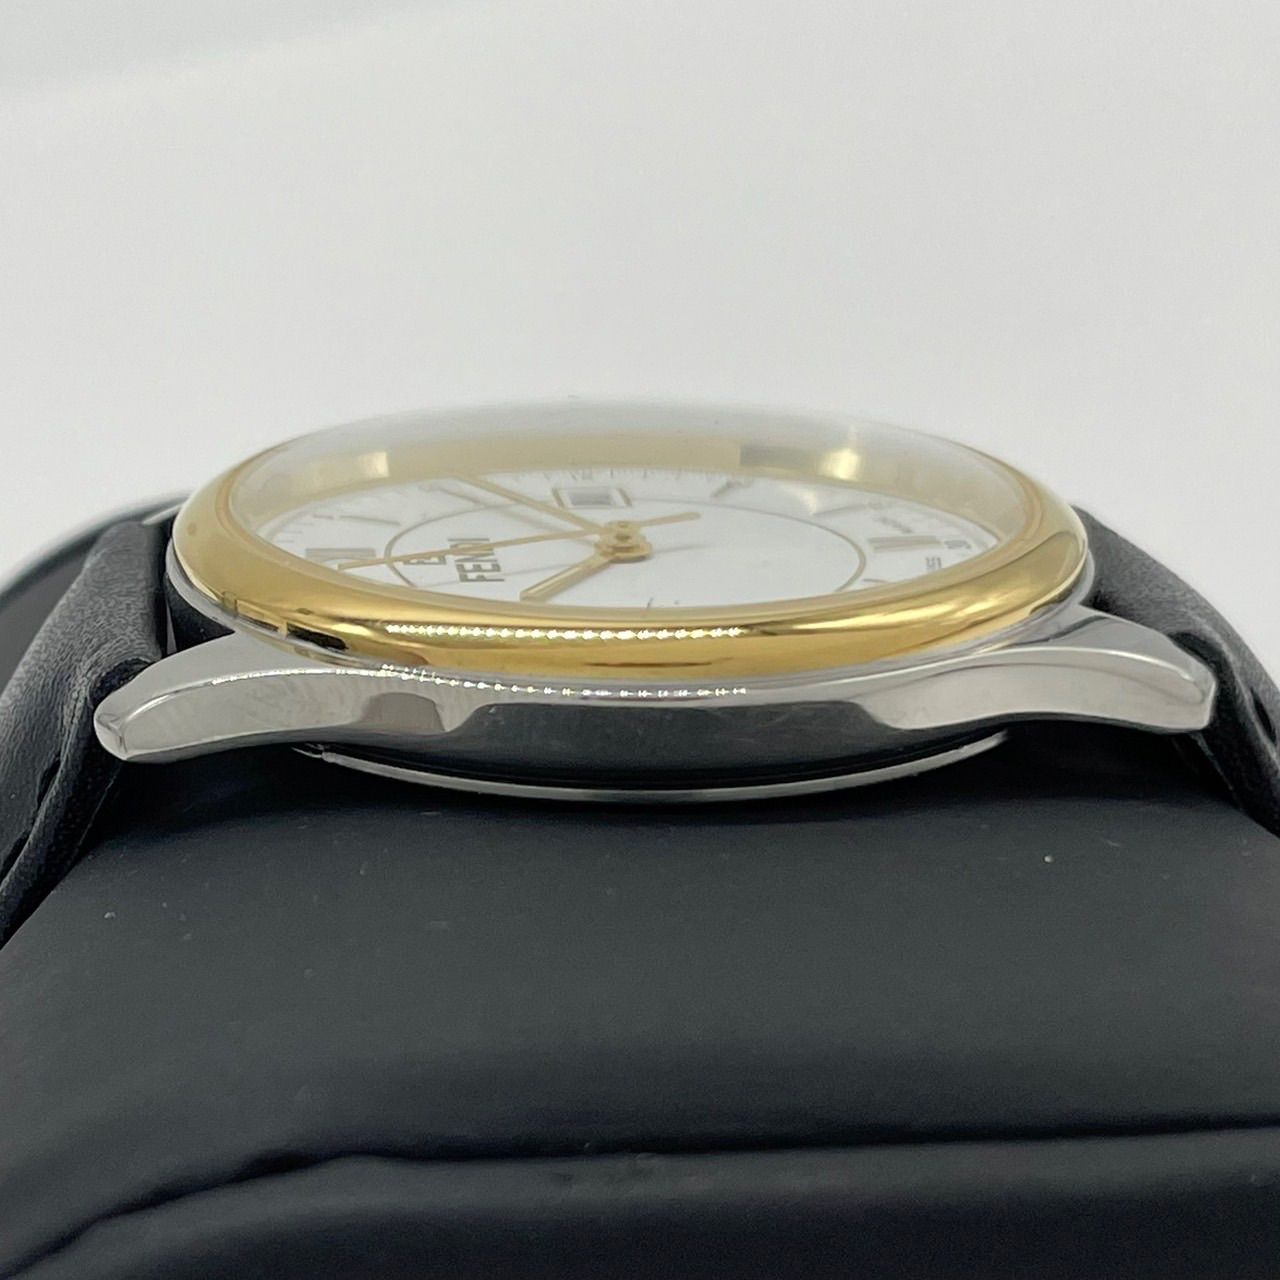 FENDI フェンディ アナログ レディース 腕時計 デイト ラウンド クオーツ 電池交換済み 新品ベルト交換済み ゴールド × 白